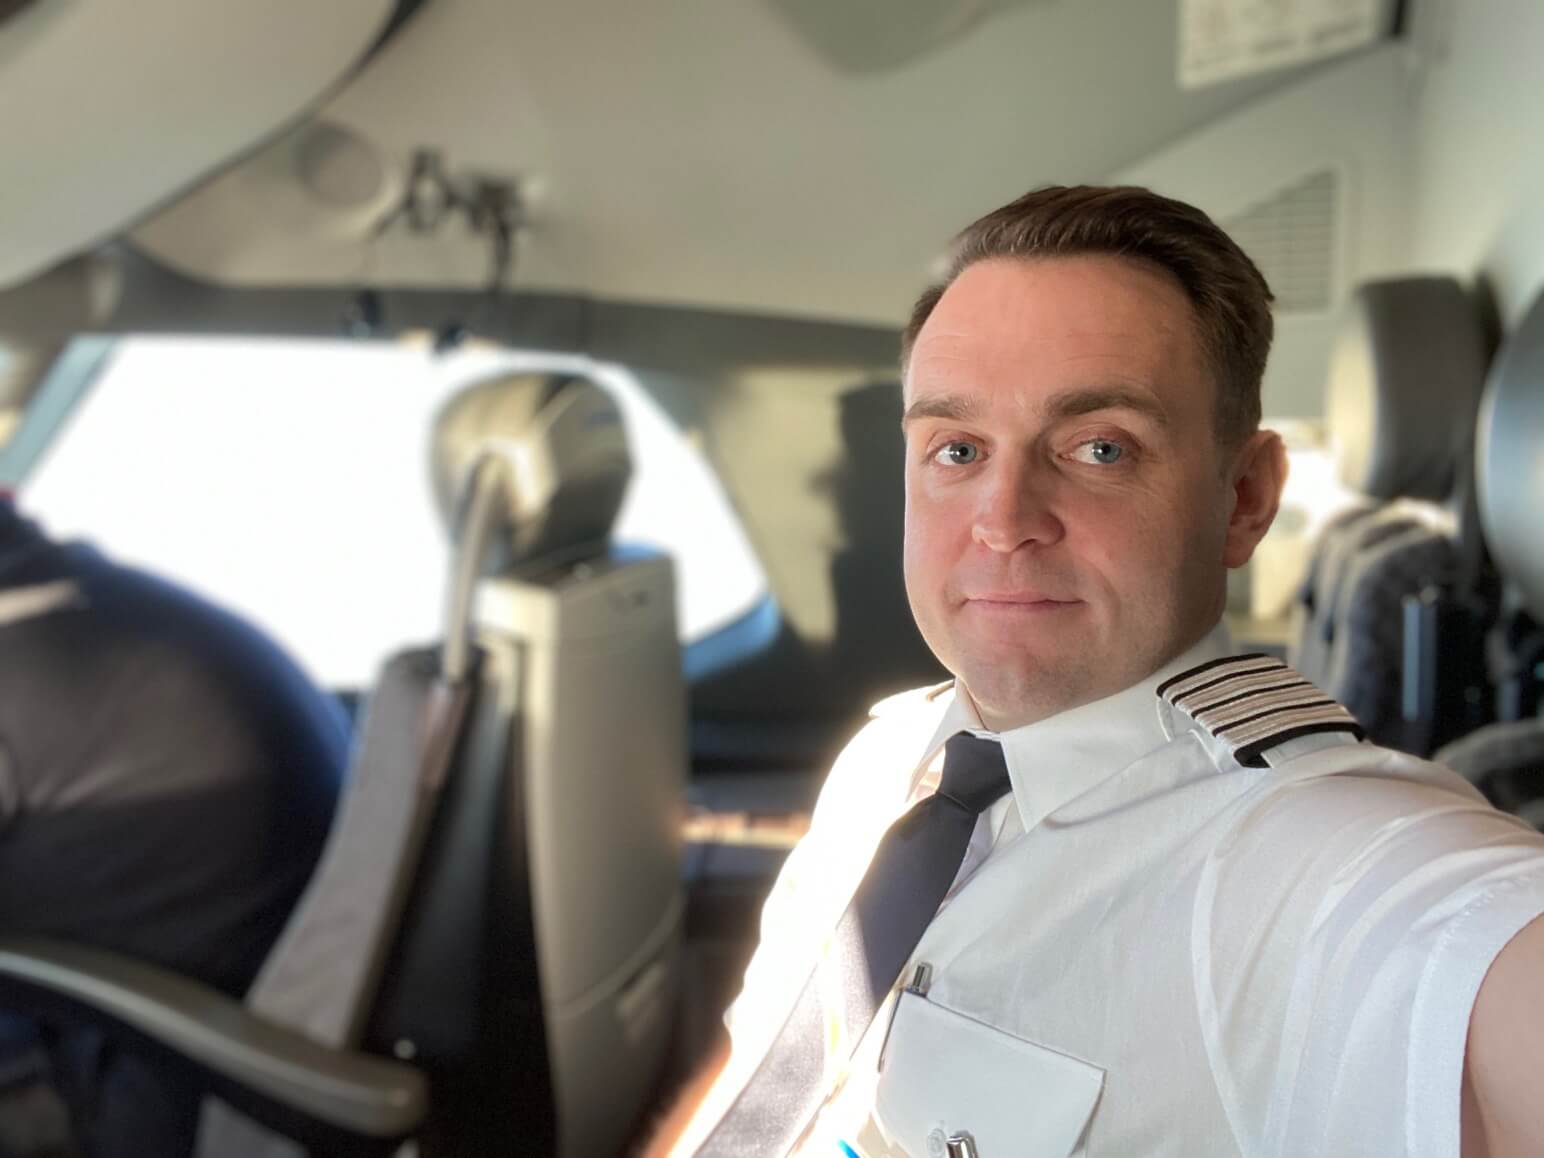 Third-generation pilot keeps spirit high despite turbulent times